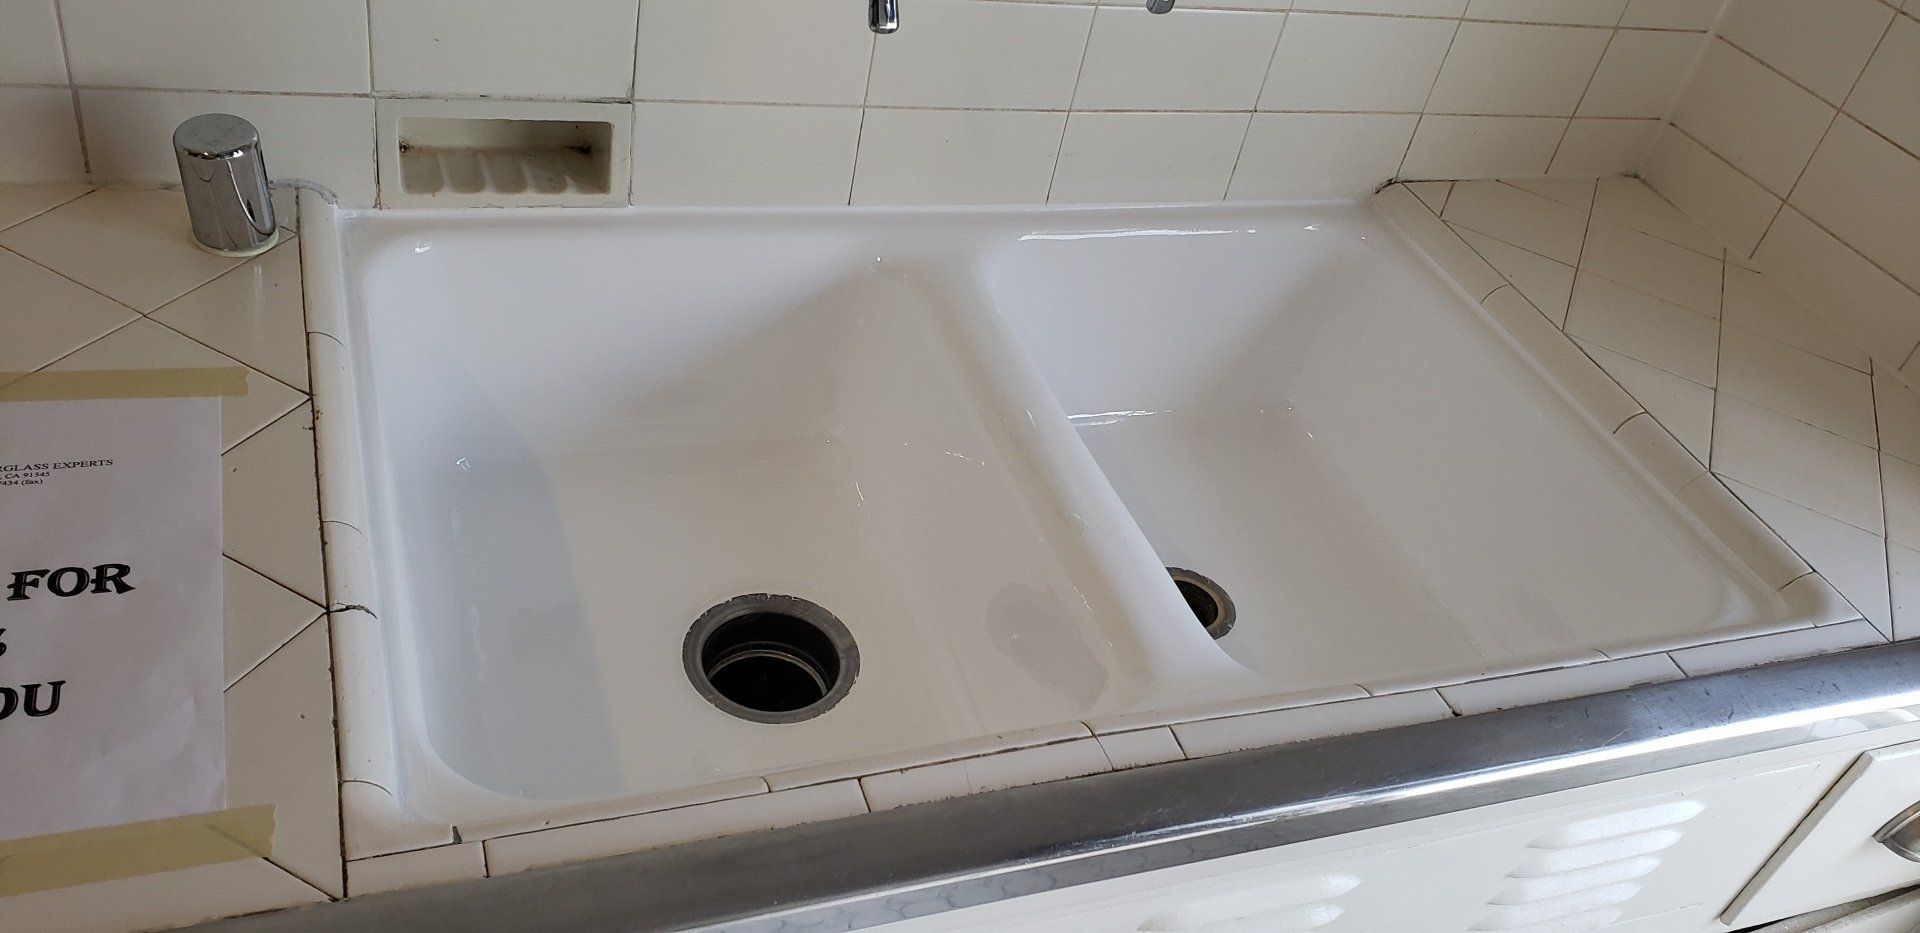 Double Bowl Kitchen Sink After Reglazing | Mission Hills, CA | Julian's Porcelain & Fiberglass Expert